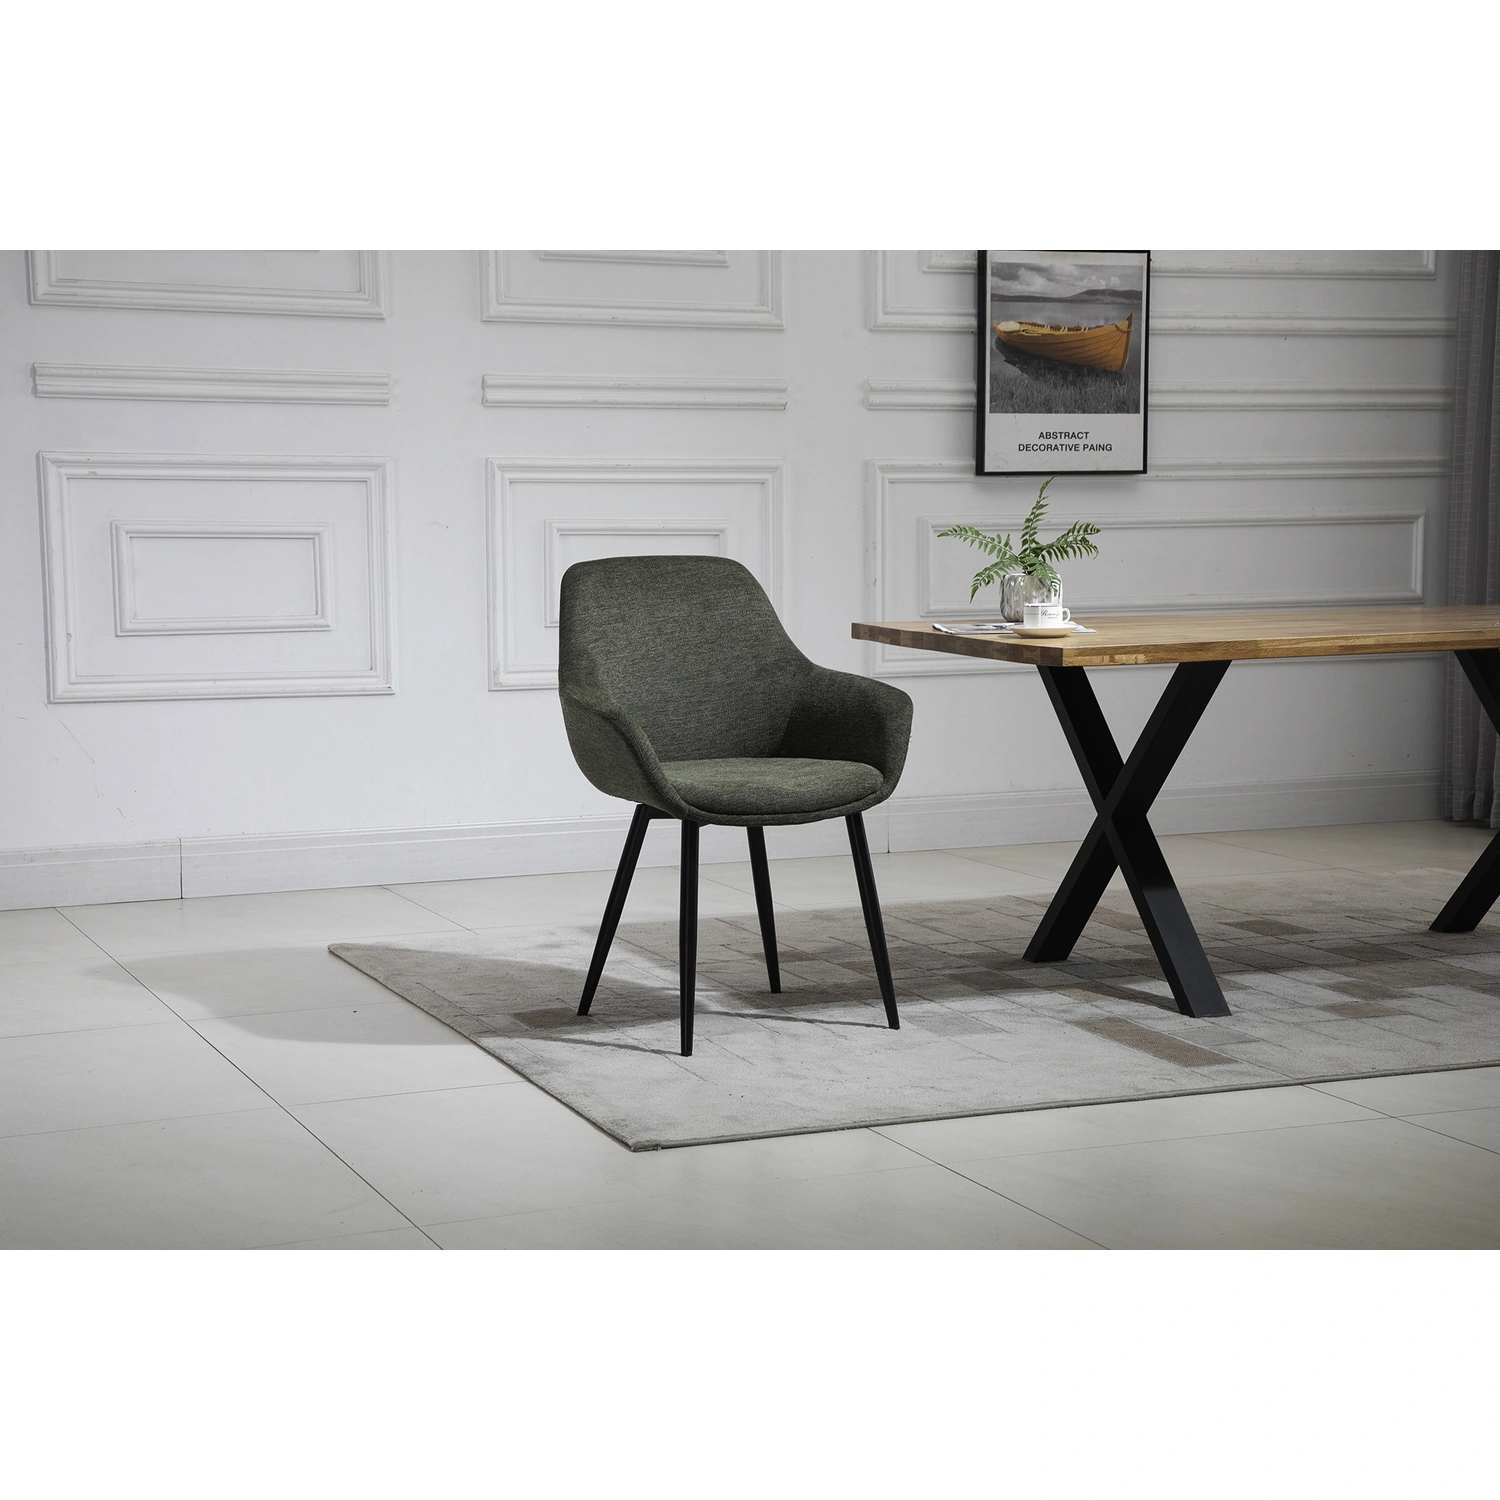 Stuhl, Höhe: 2 stk grün/schwarz, SalesFever 86 cm,